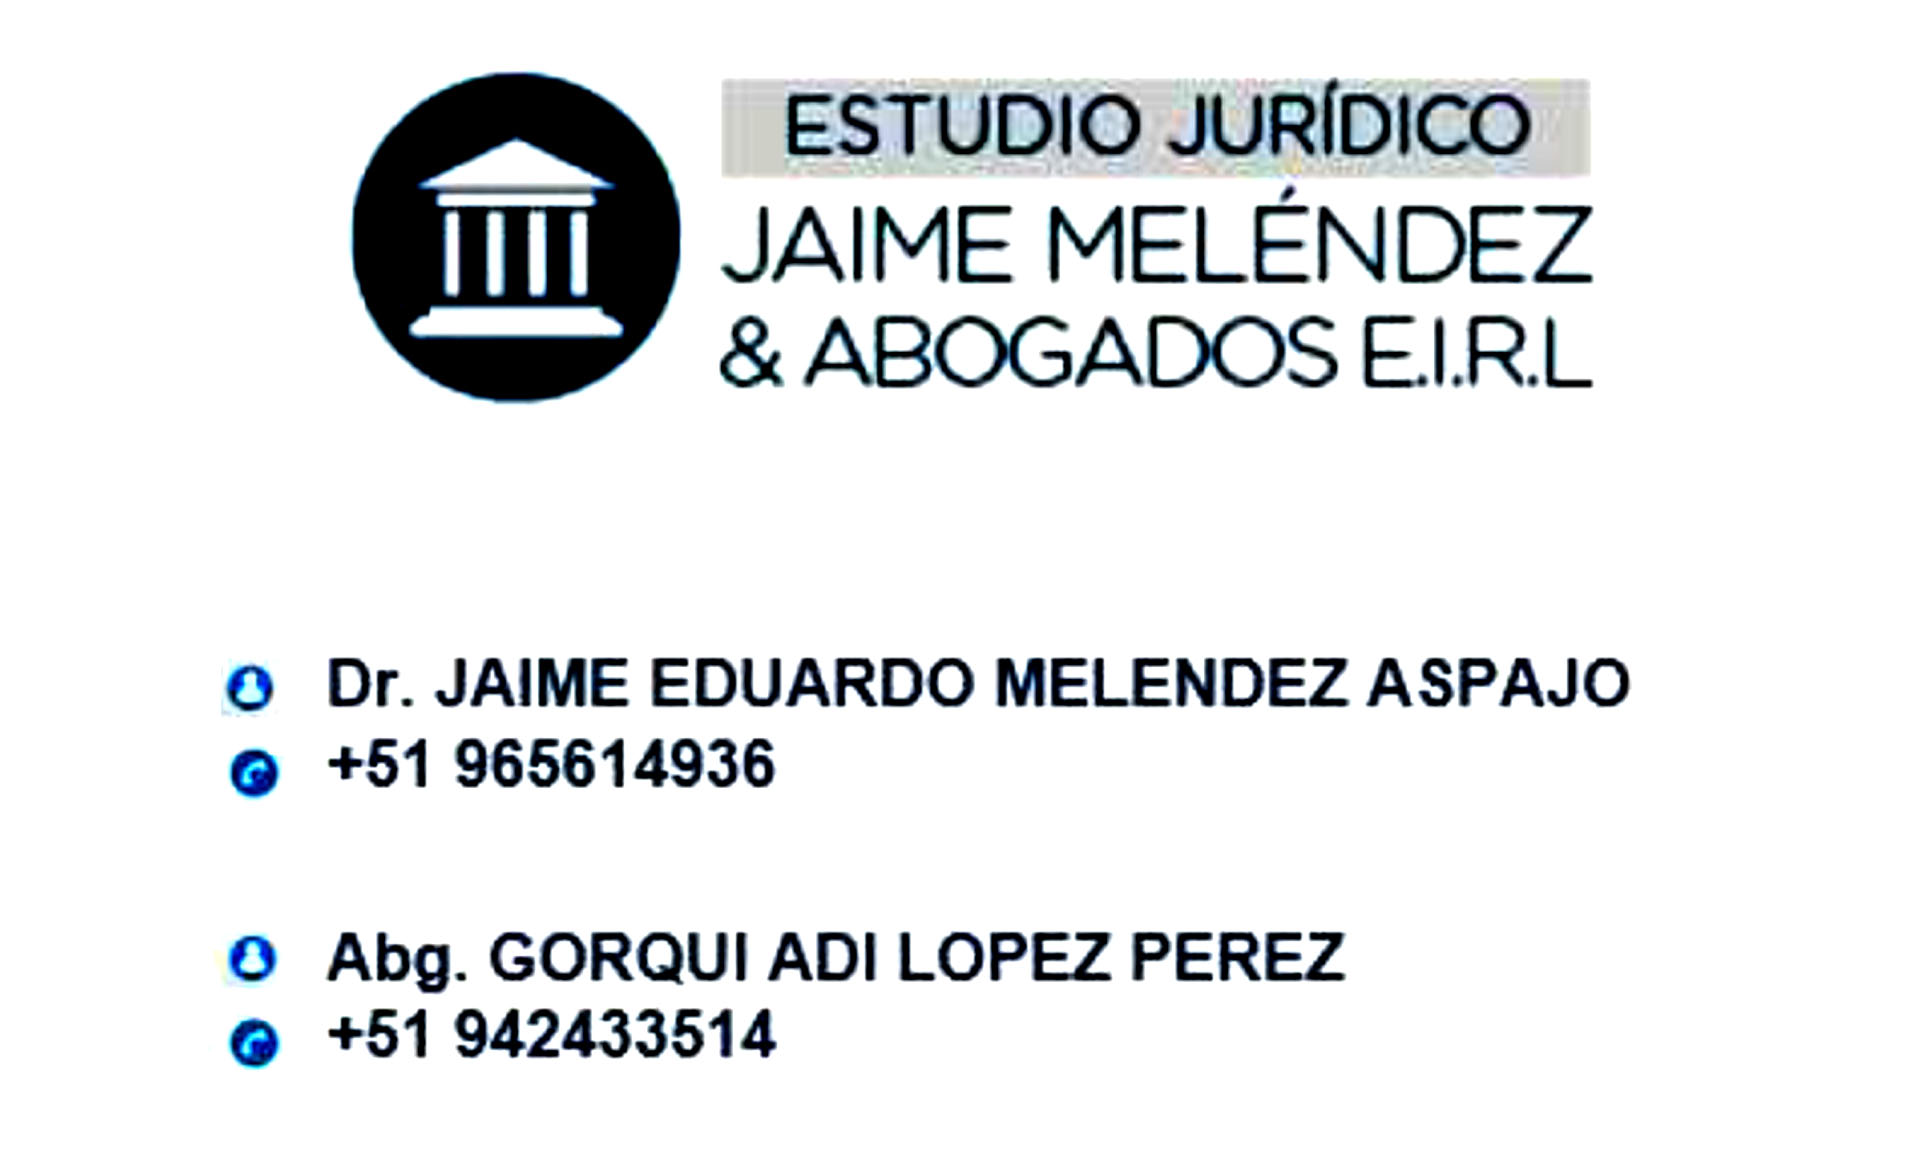 Estudio Jurídico Jaime Meléndez & Abogados E,I.R.L